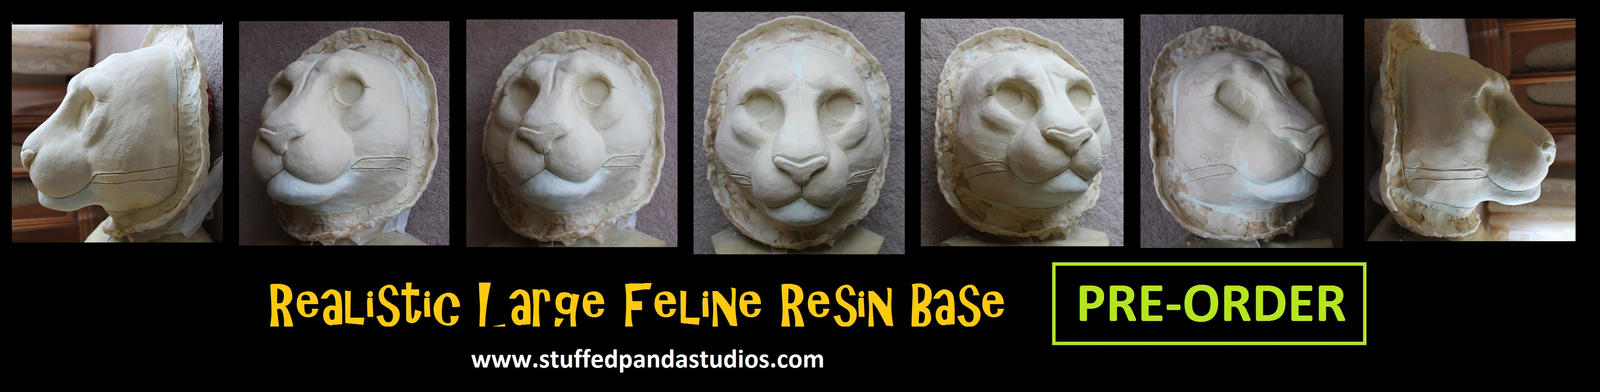 PRE-ORDER large feline resin and foam base